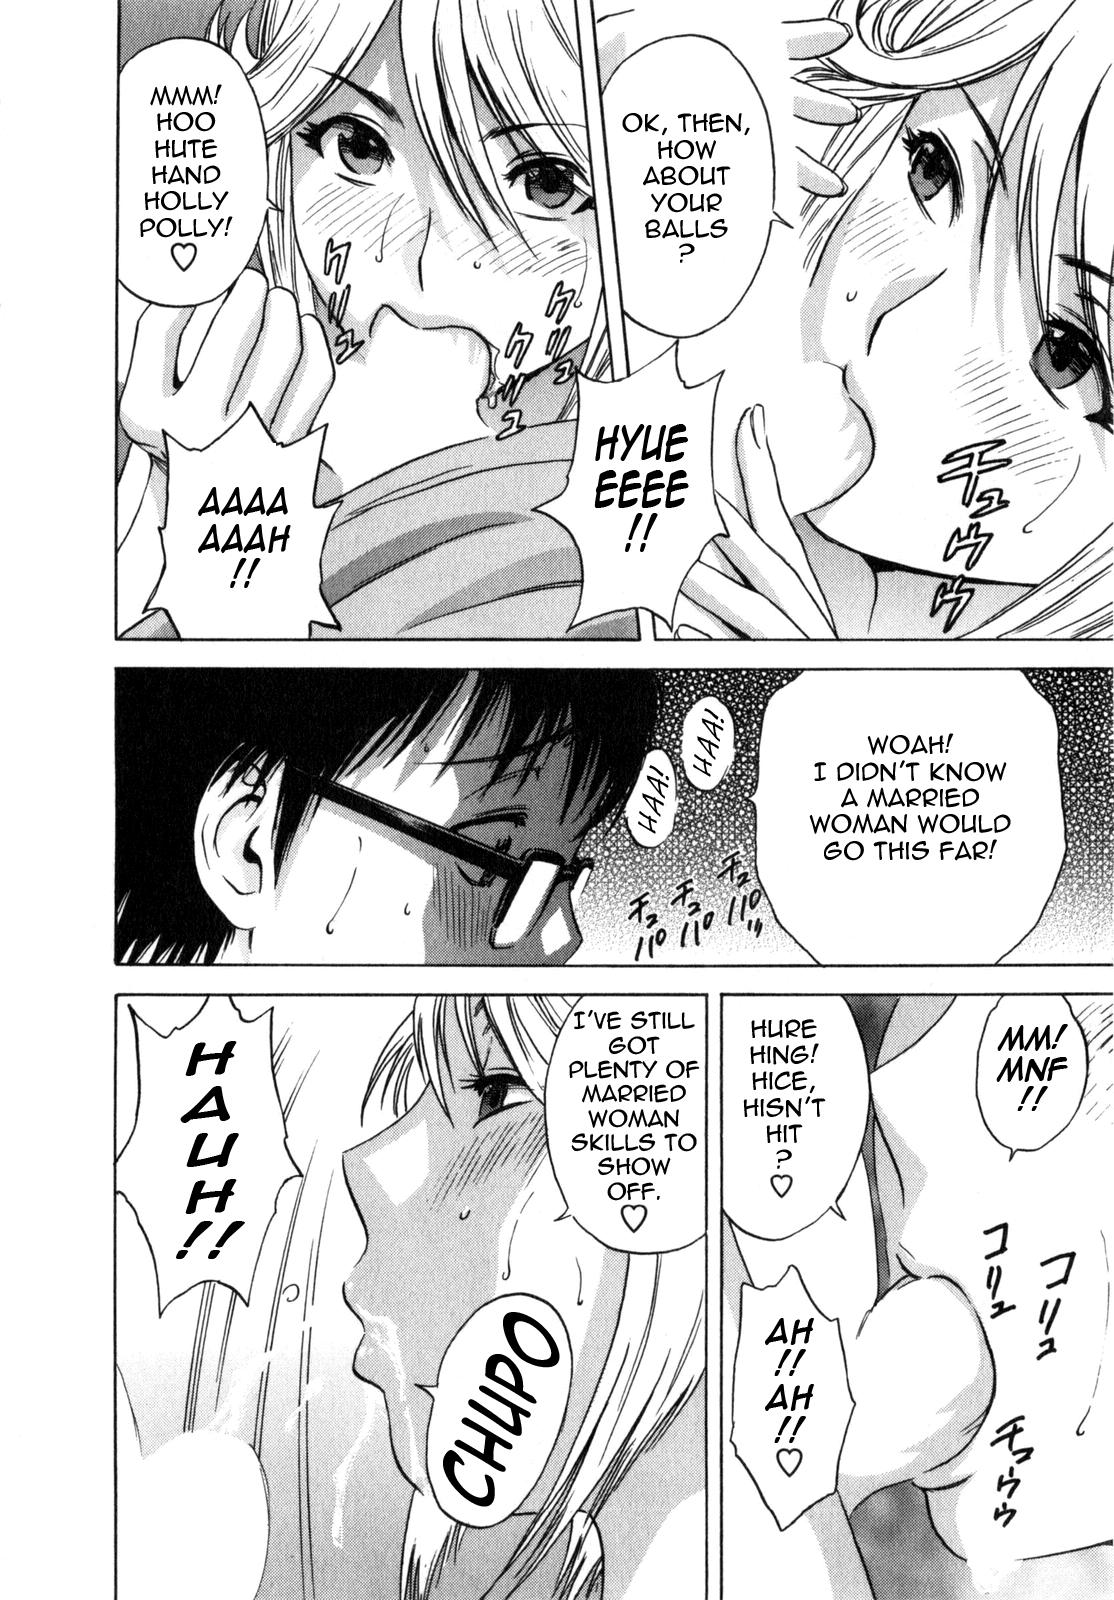 [Hidemaru] Life with Married Women Just Like a Manga 1 - Ch. 1-2 [English] {Tadanohito} 35